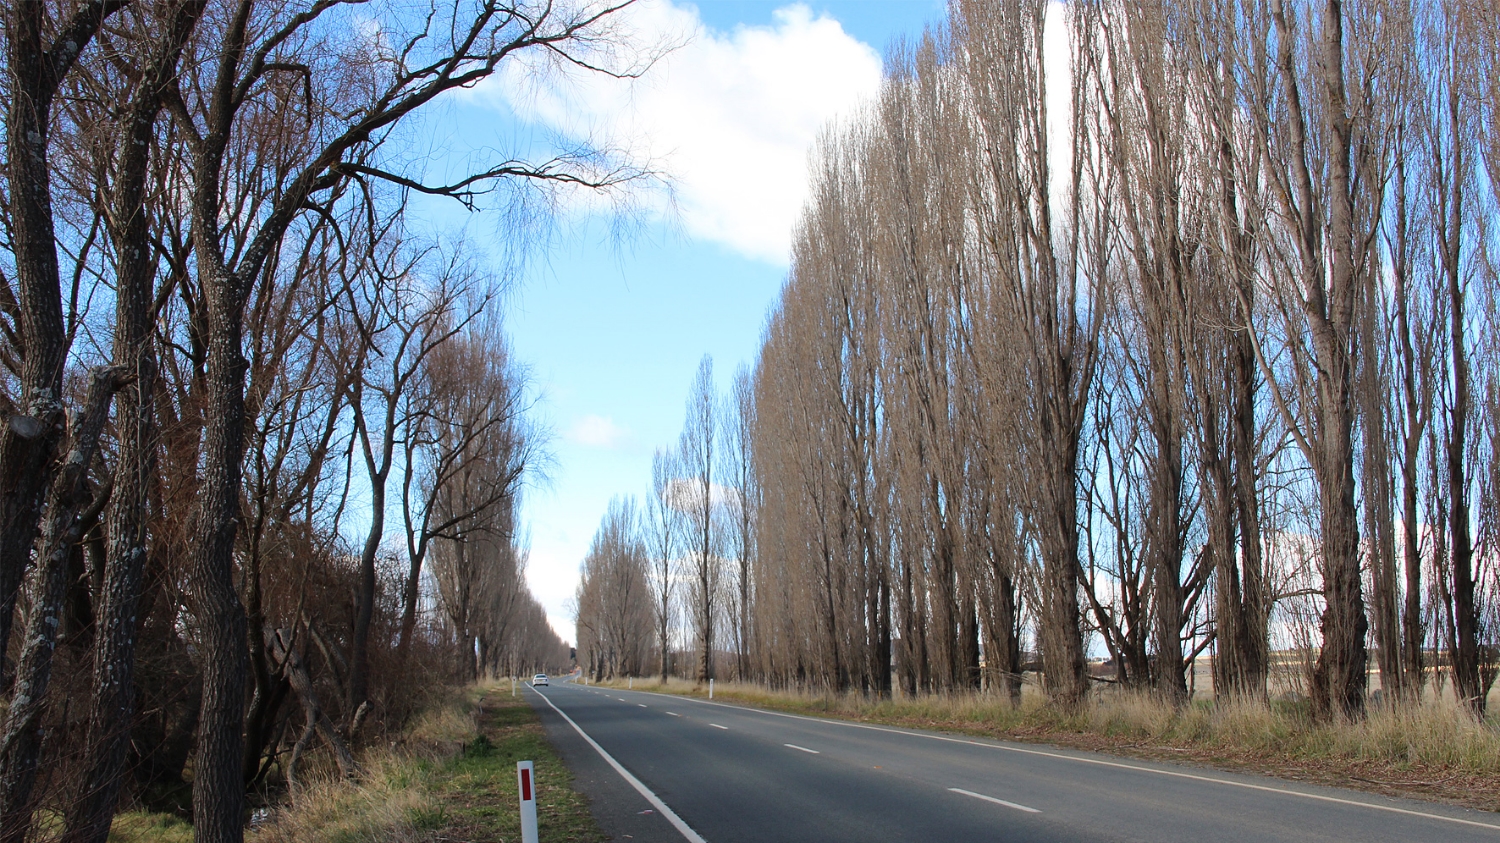 Kings Highway VIA + Tree Management Plan